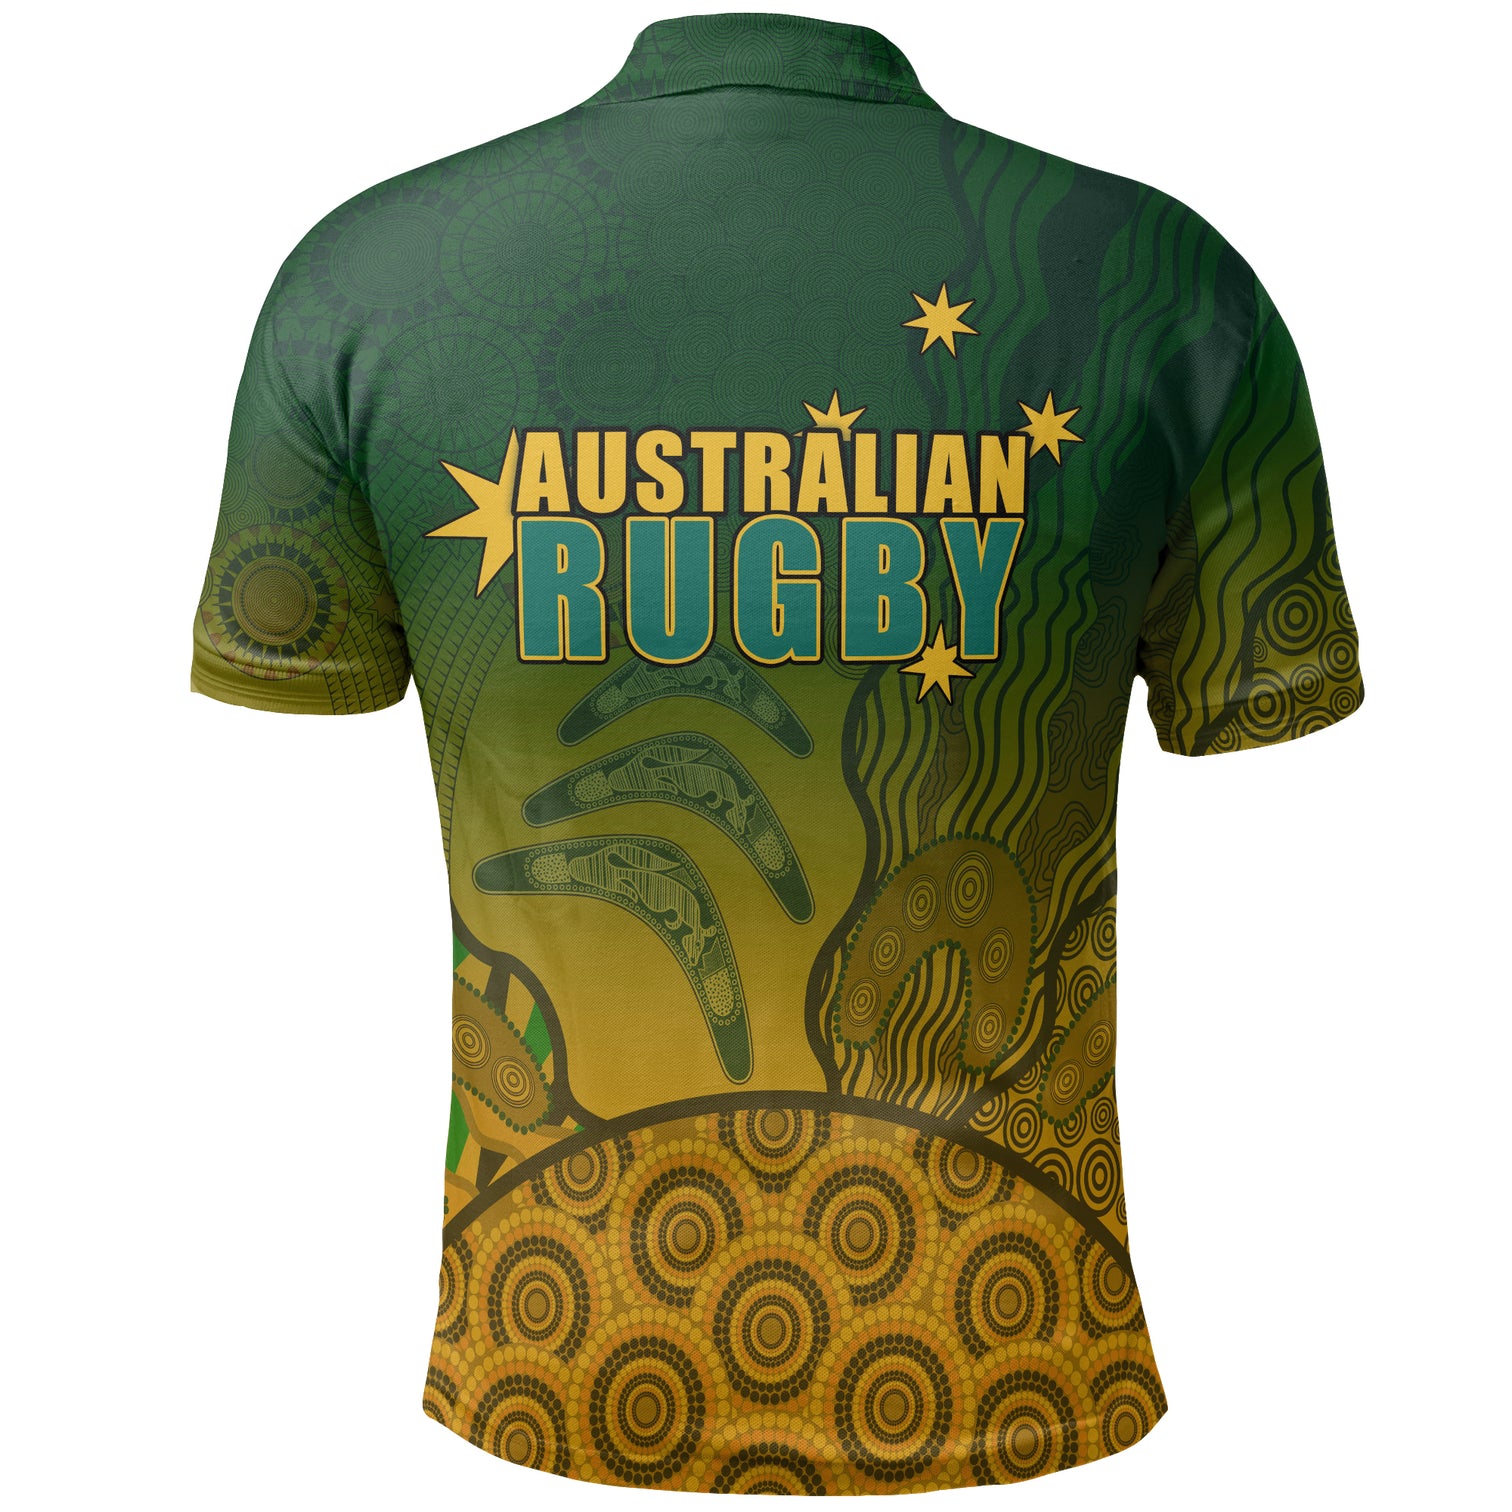 1stAustralia Polo Shirt, Aboriginal Australian Rugby Shirt - BN15 - 1st ...